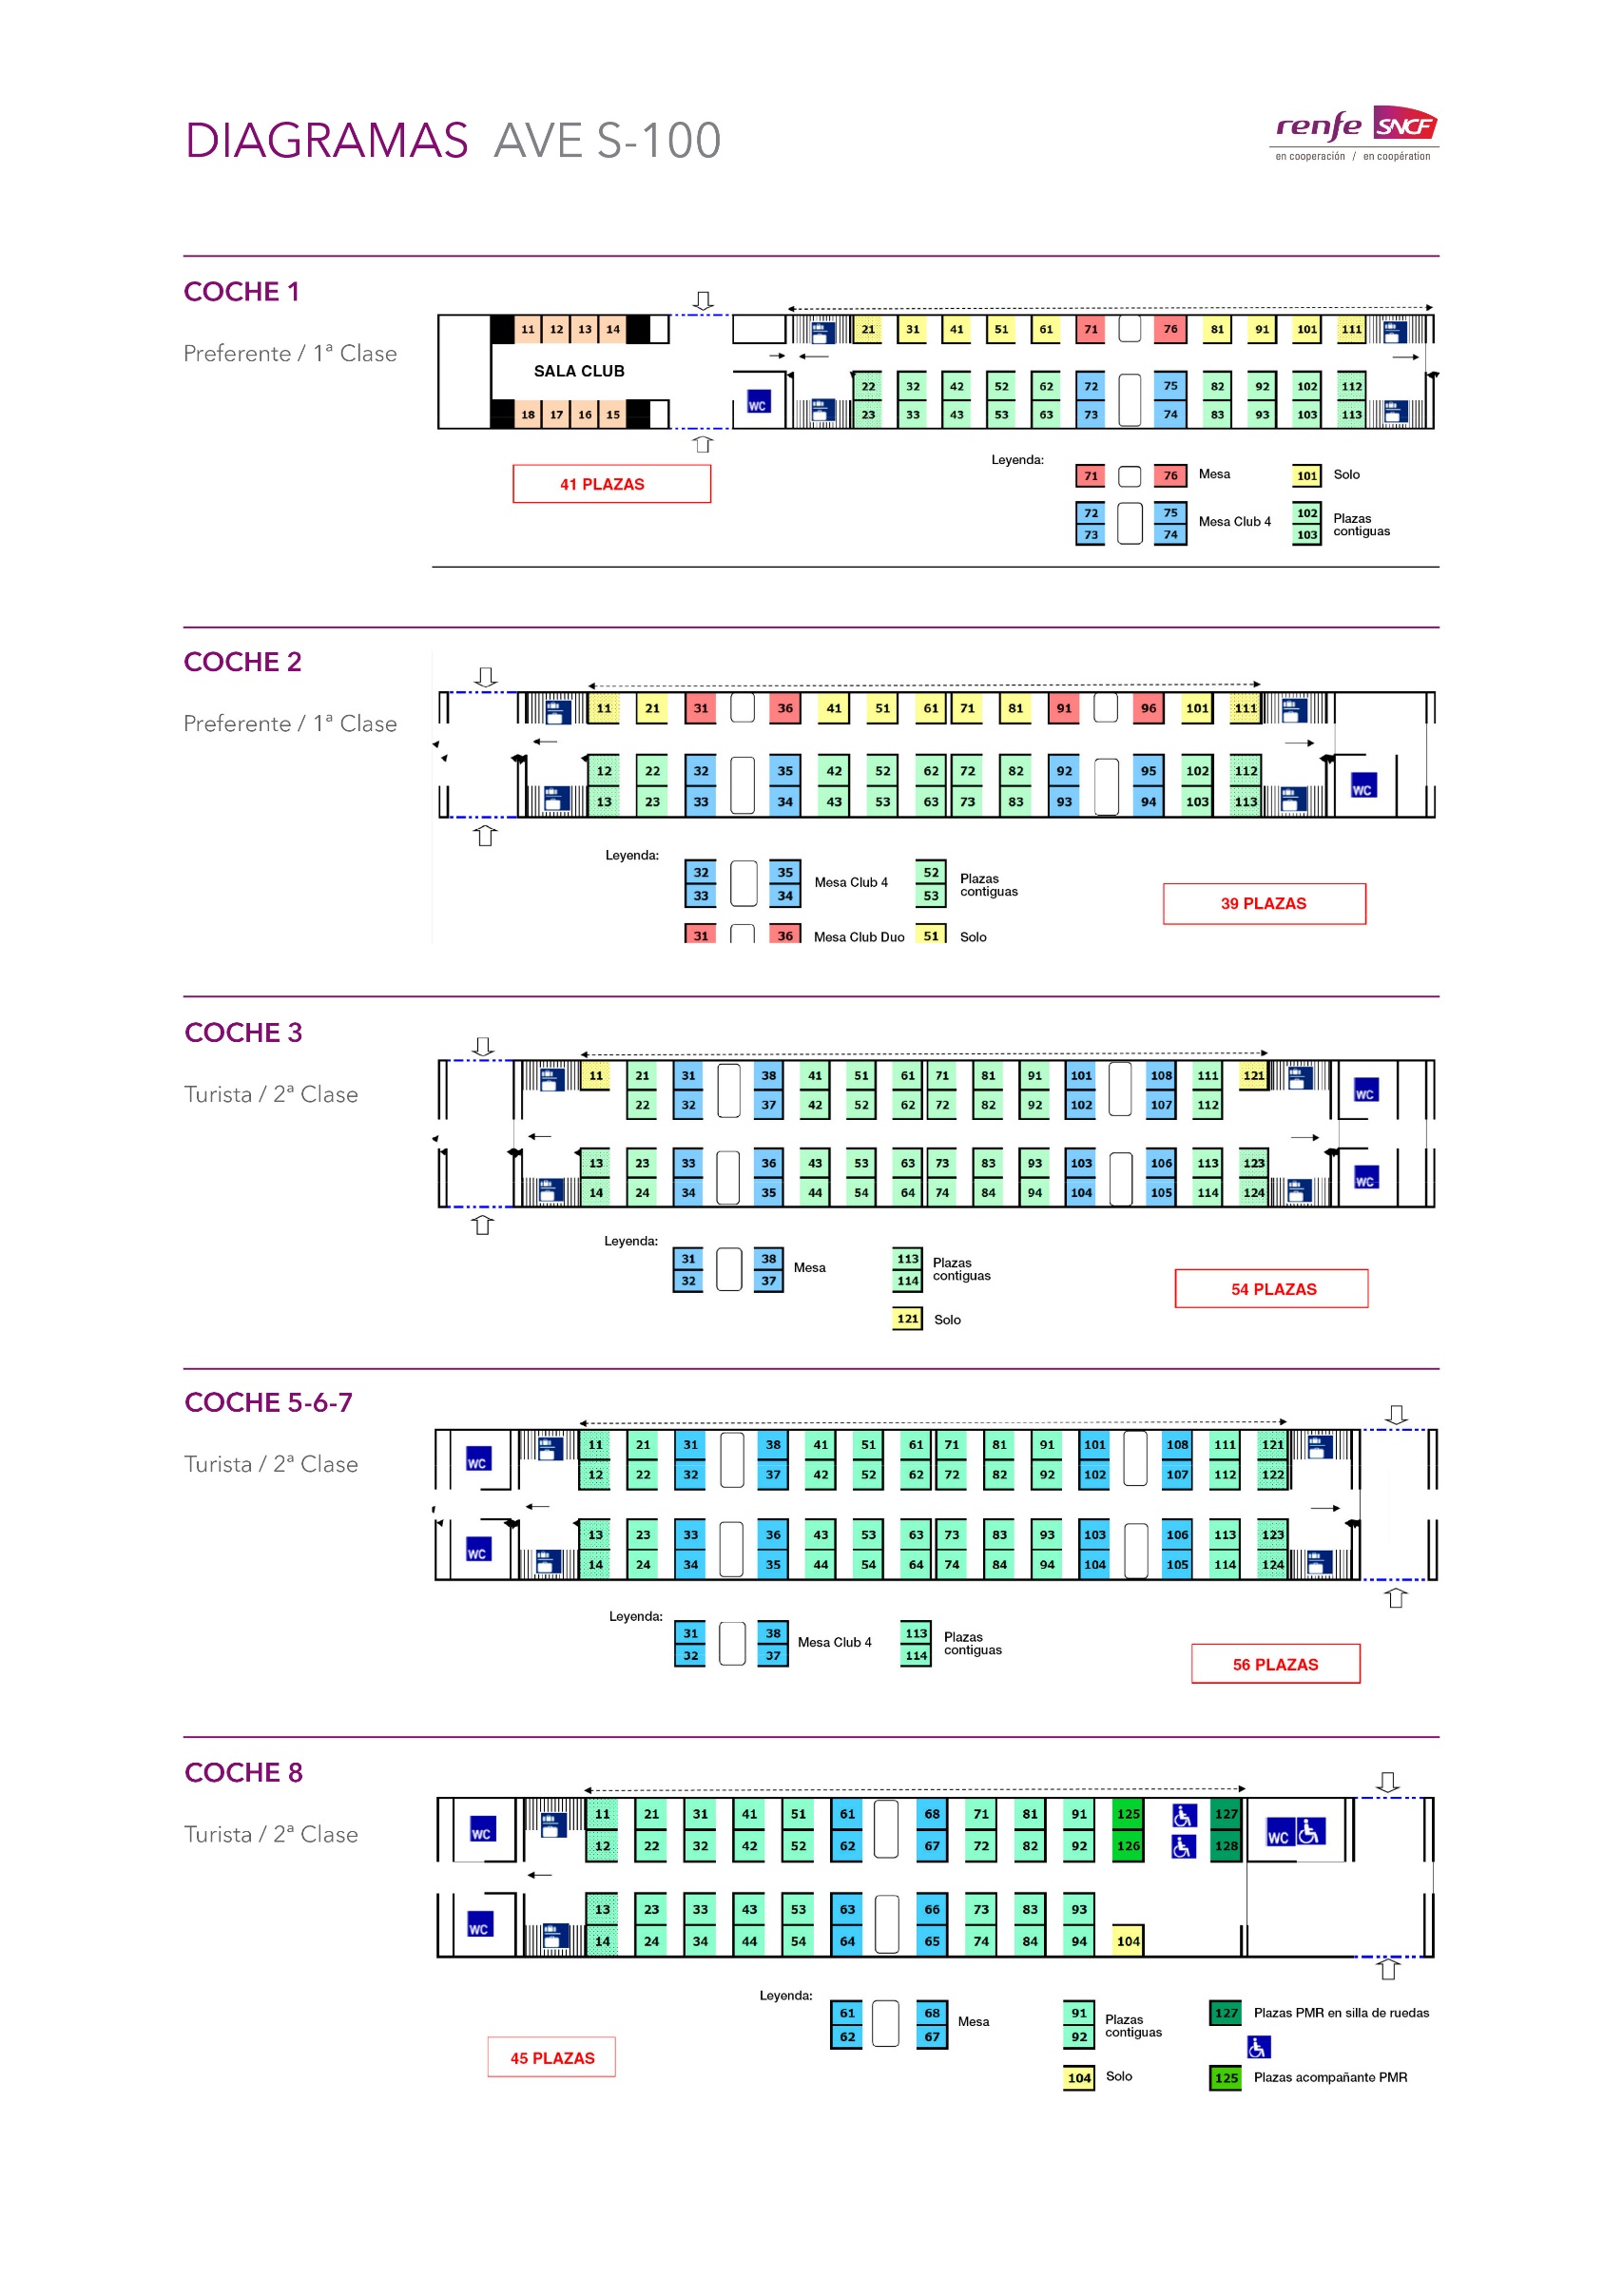 Train Seating Chart